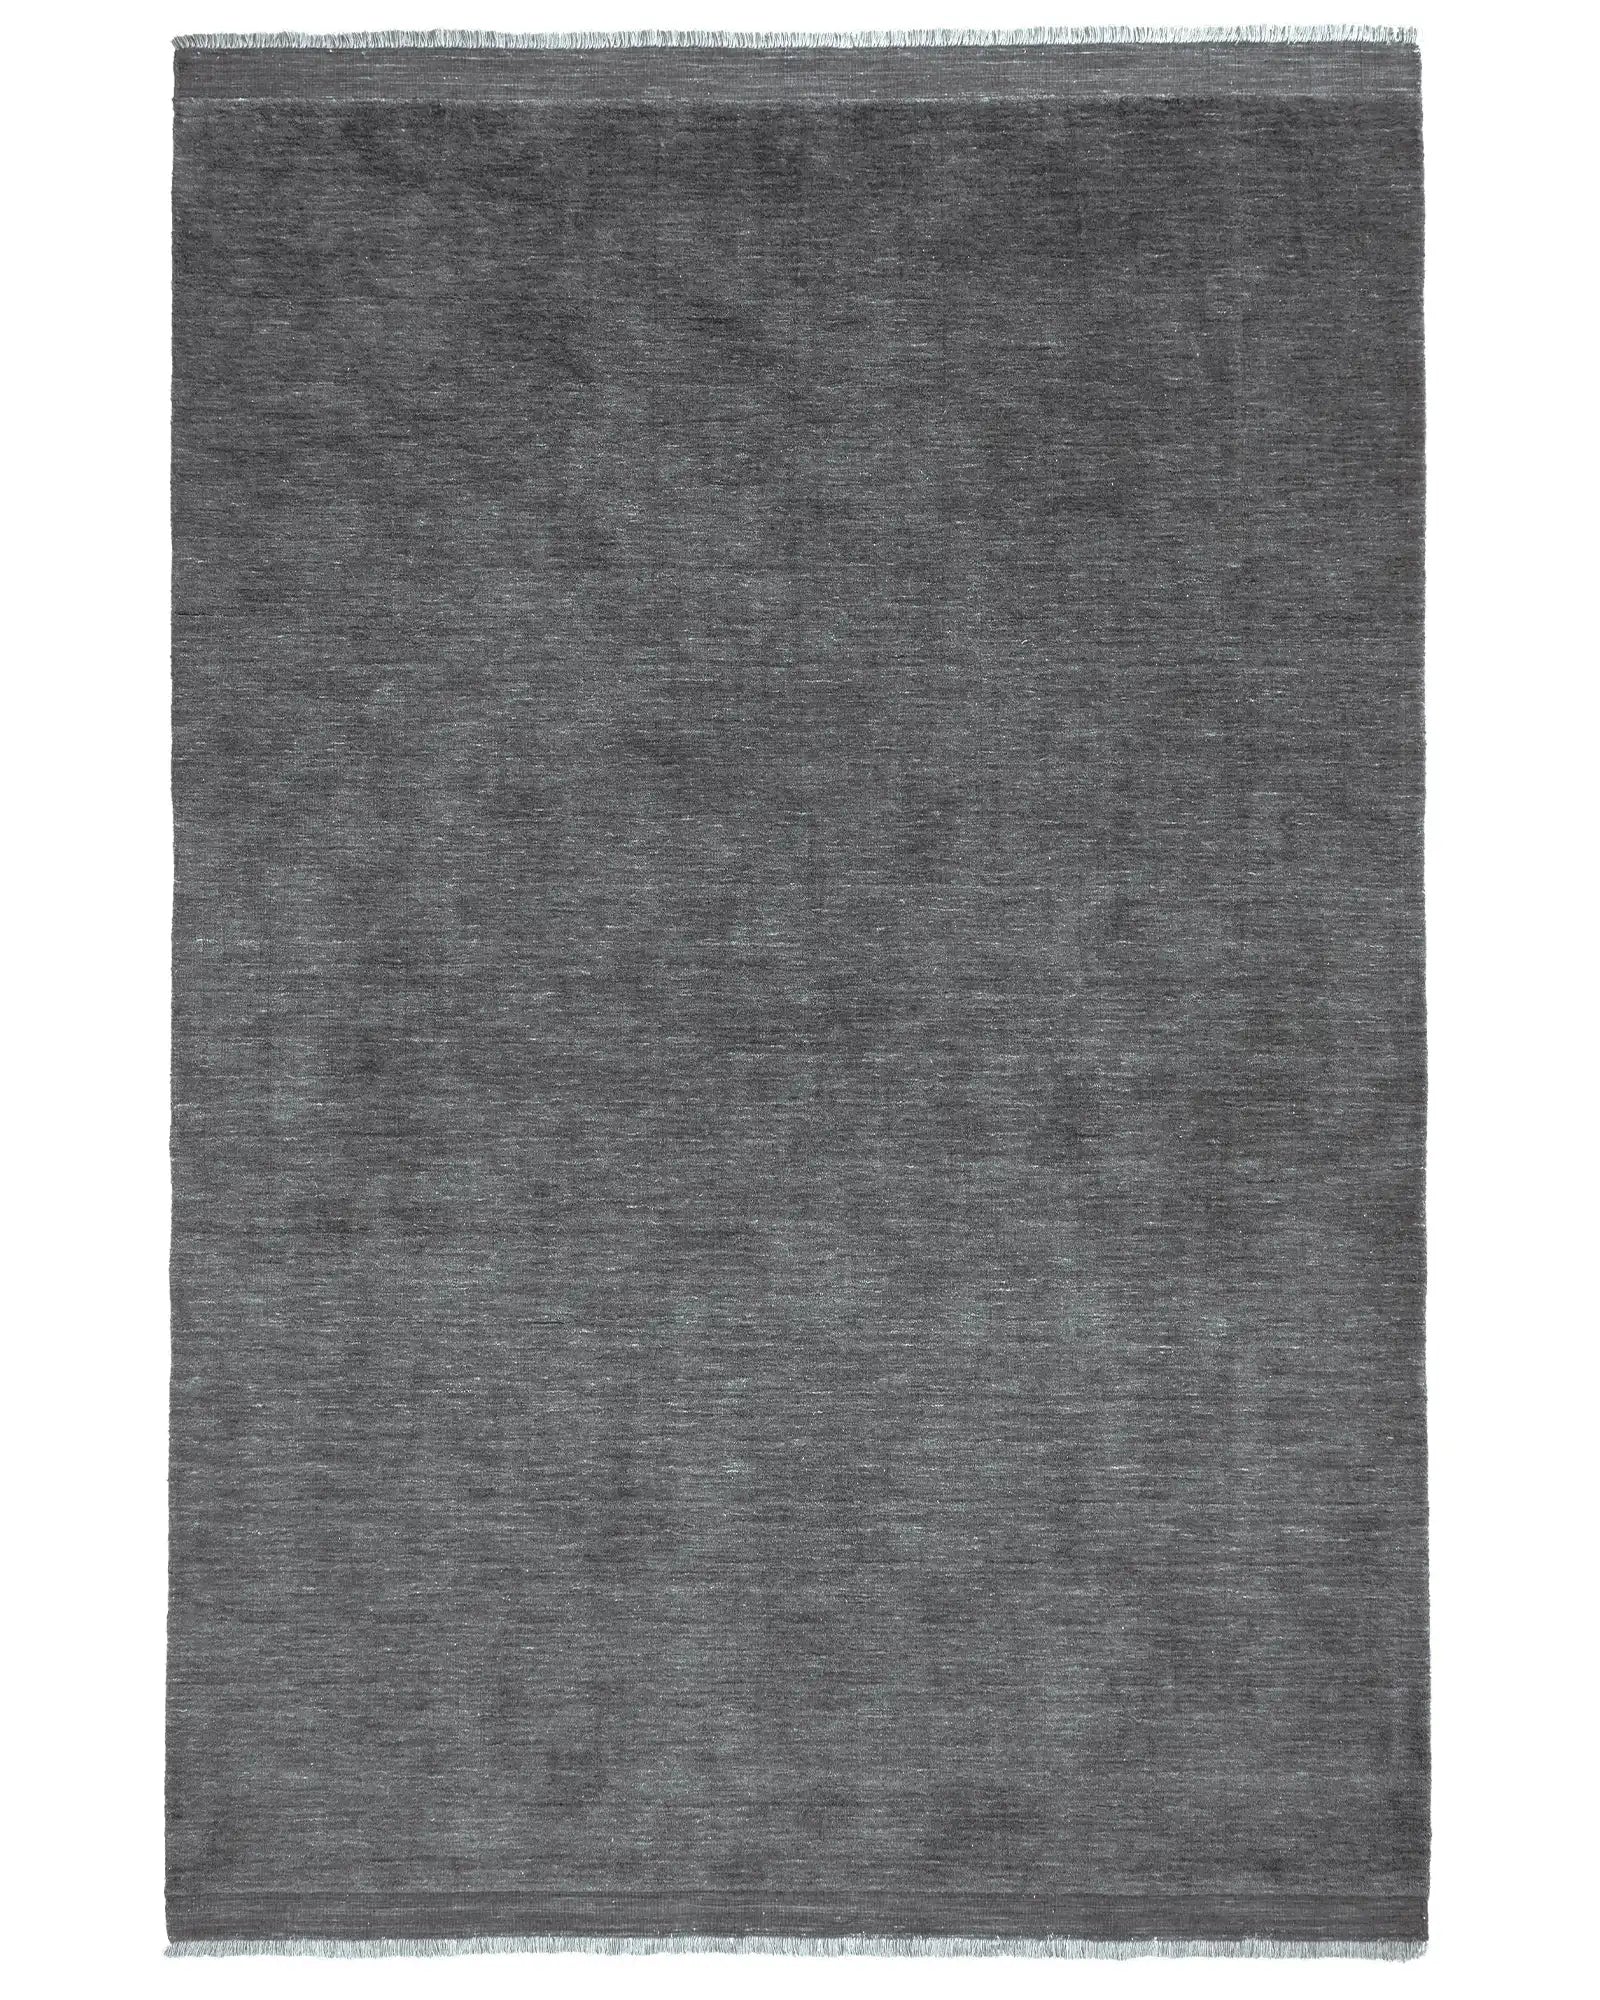 Silvio Floor Rug - Fog - 2m x 3m - NZ Wool (Copy)